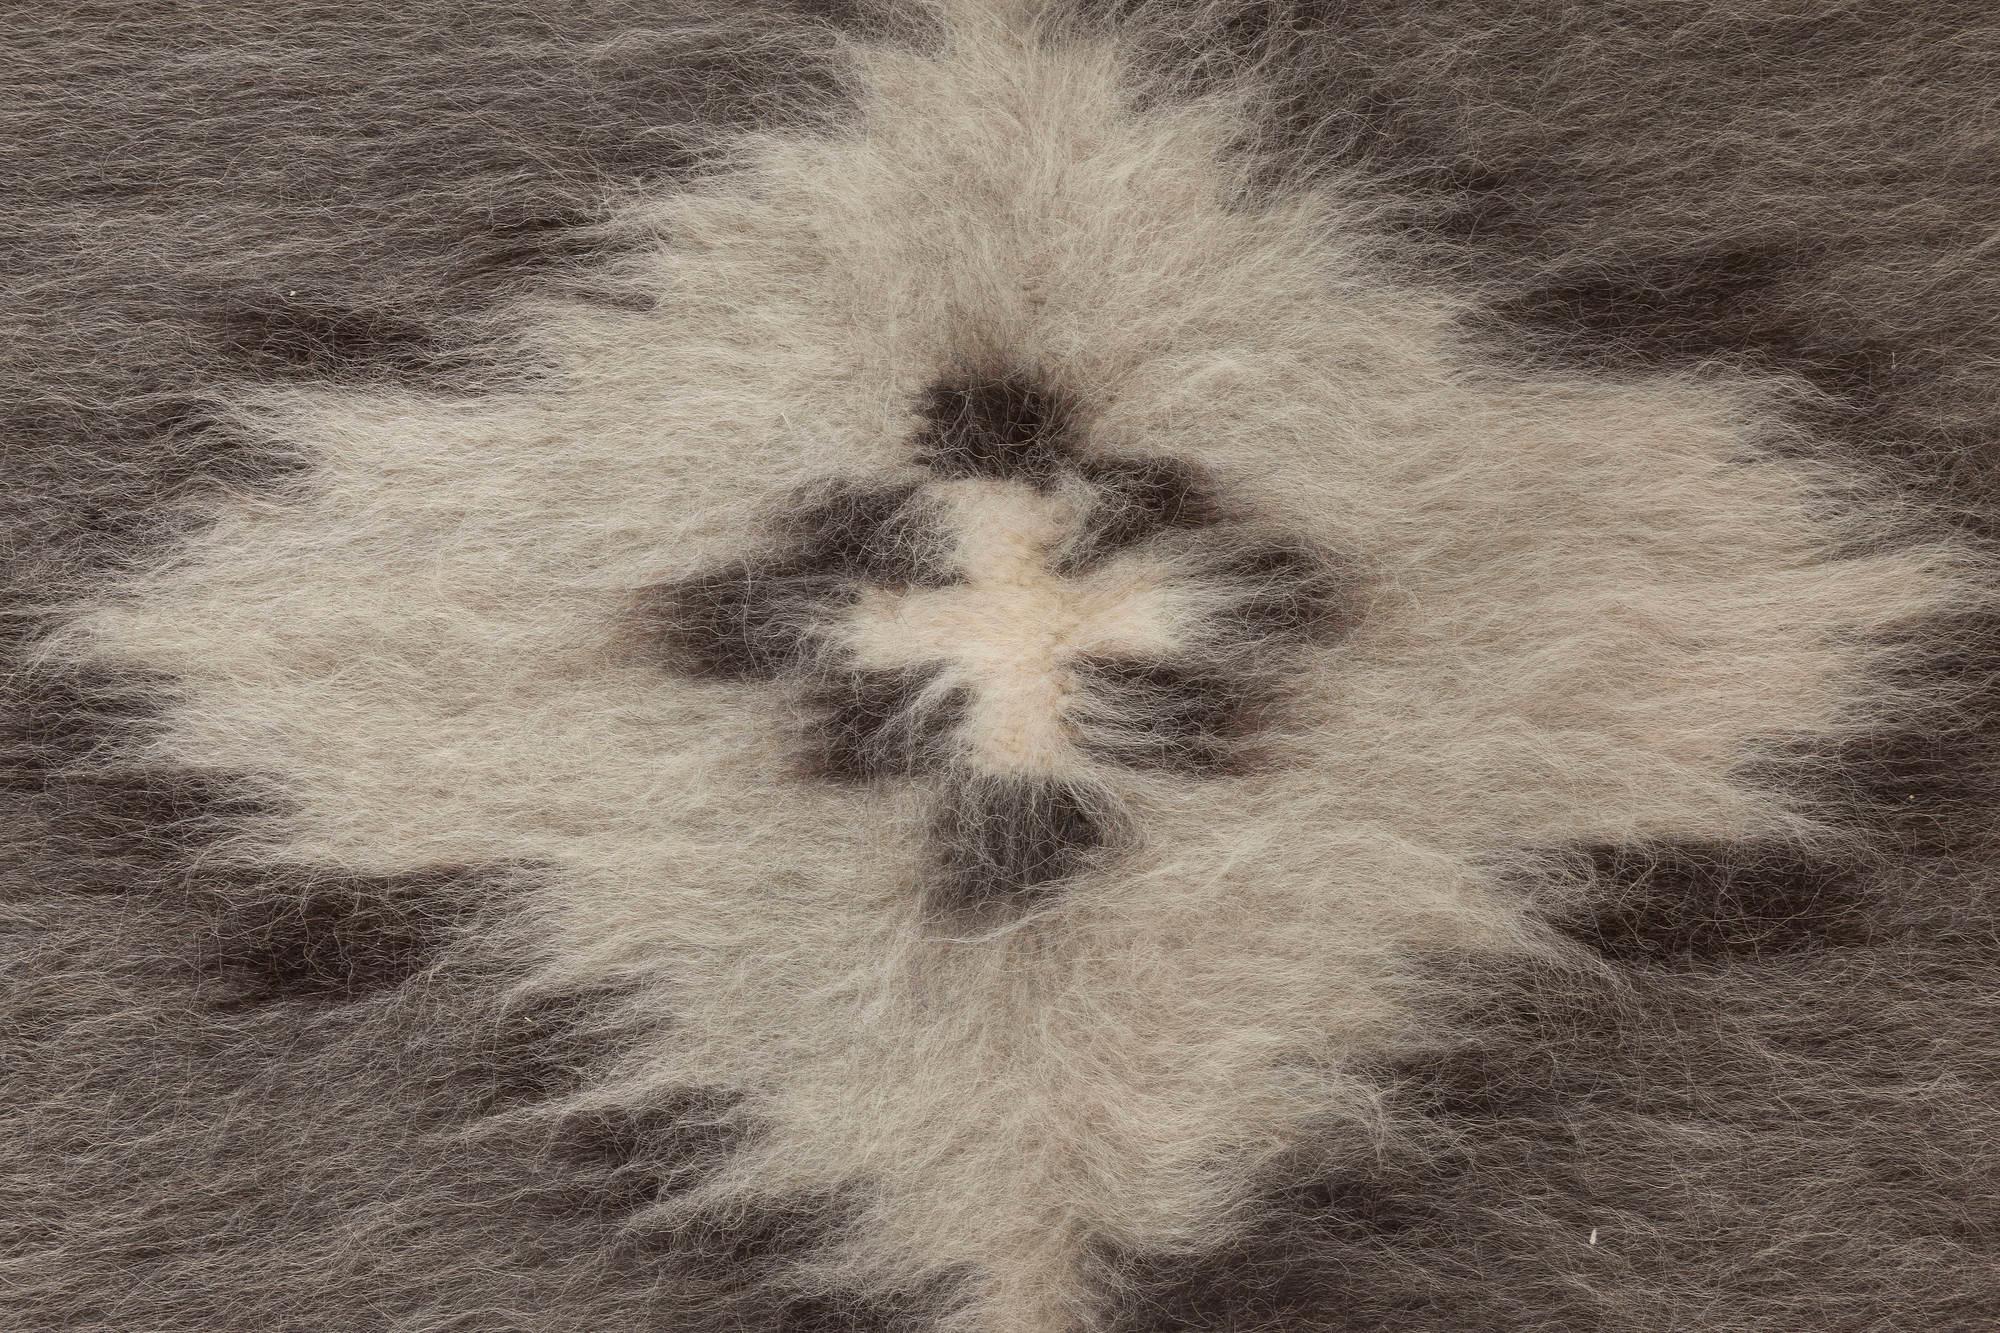 Contemporary European Folk Stamverband IV goat hair rug by Doris Leslie Blau
Size: 4'9